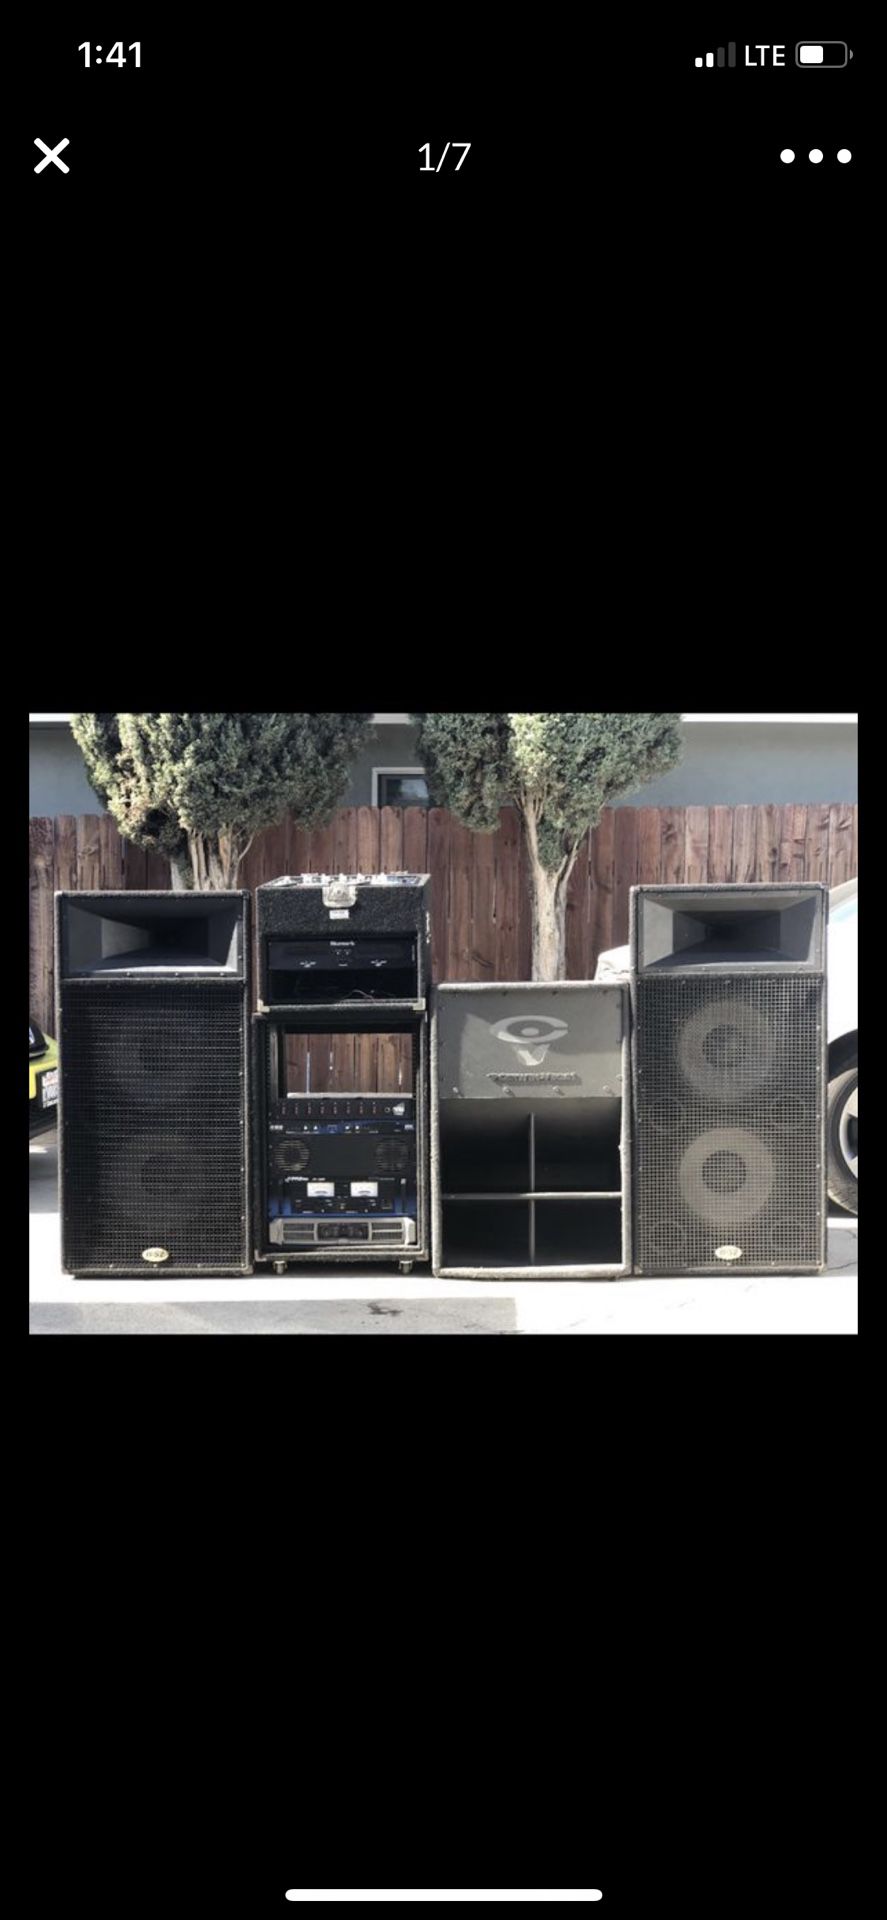 Dj equipment/ B52 Speaker/ Cerwin Vega Subwoofer/ CD players / Mixer